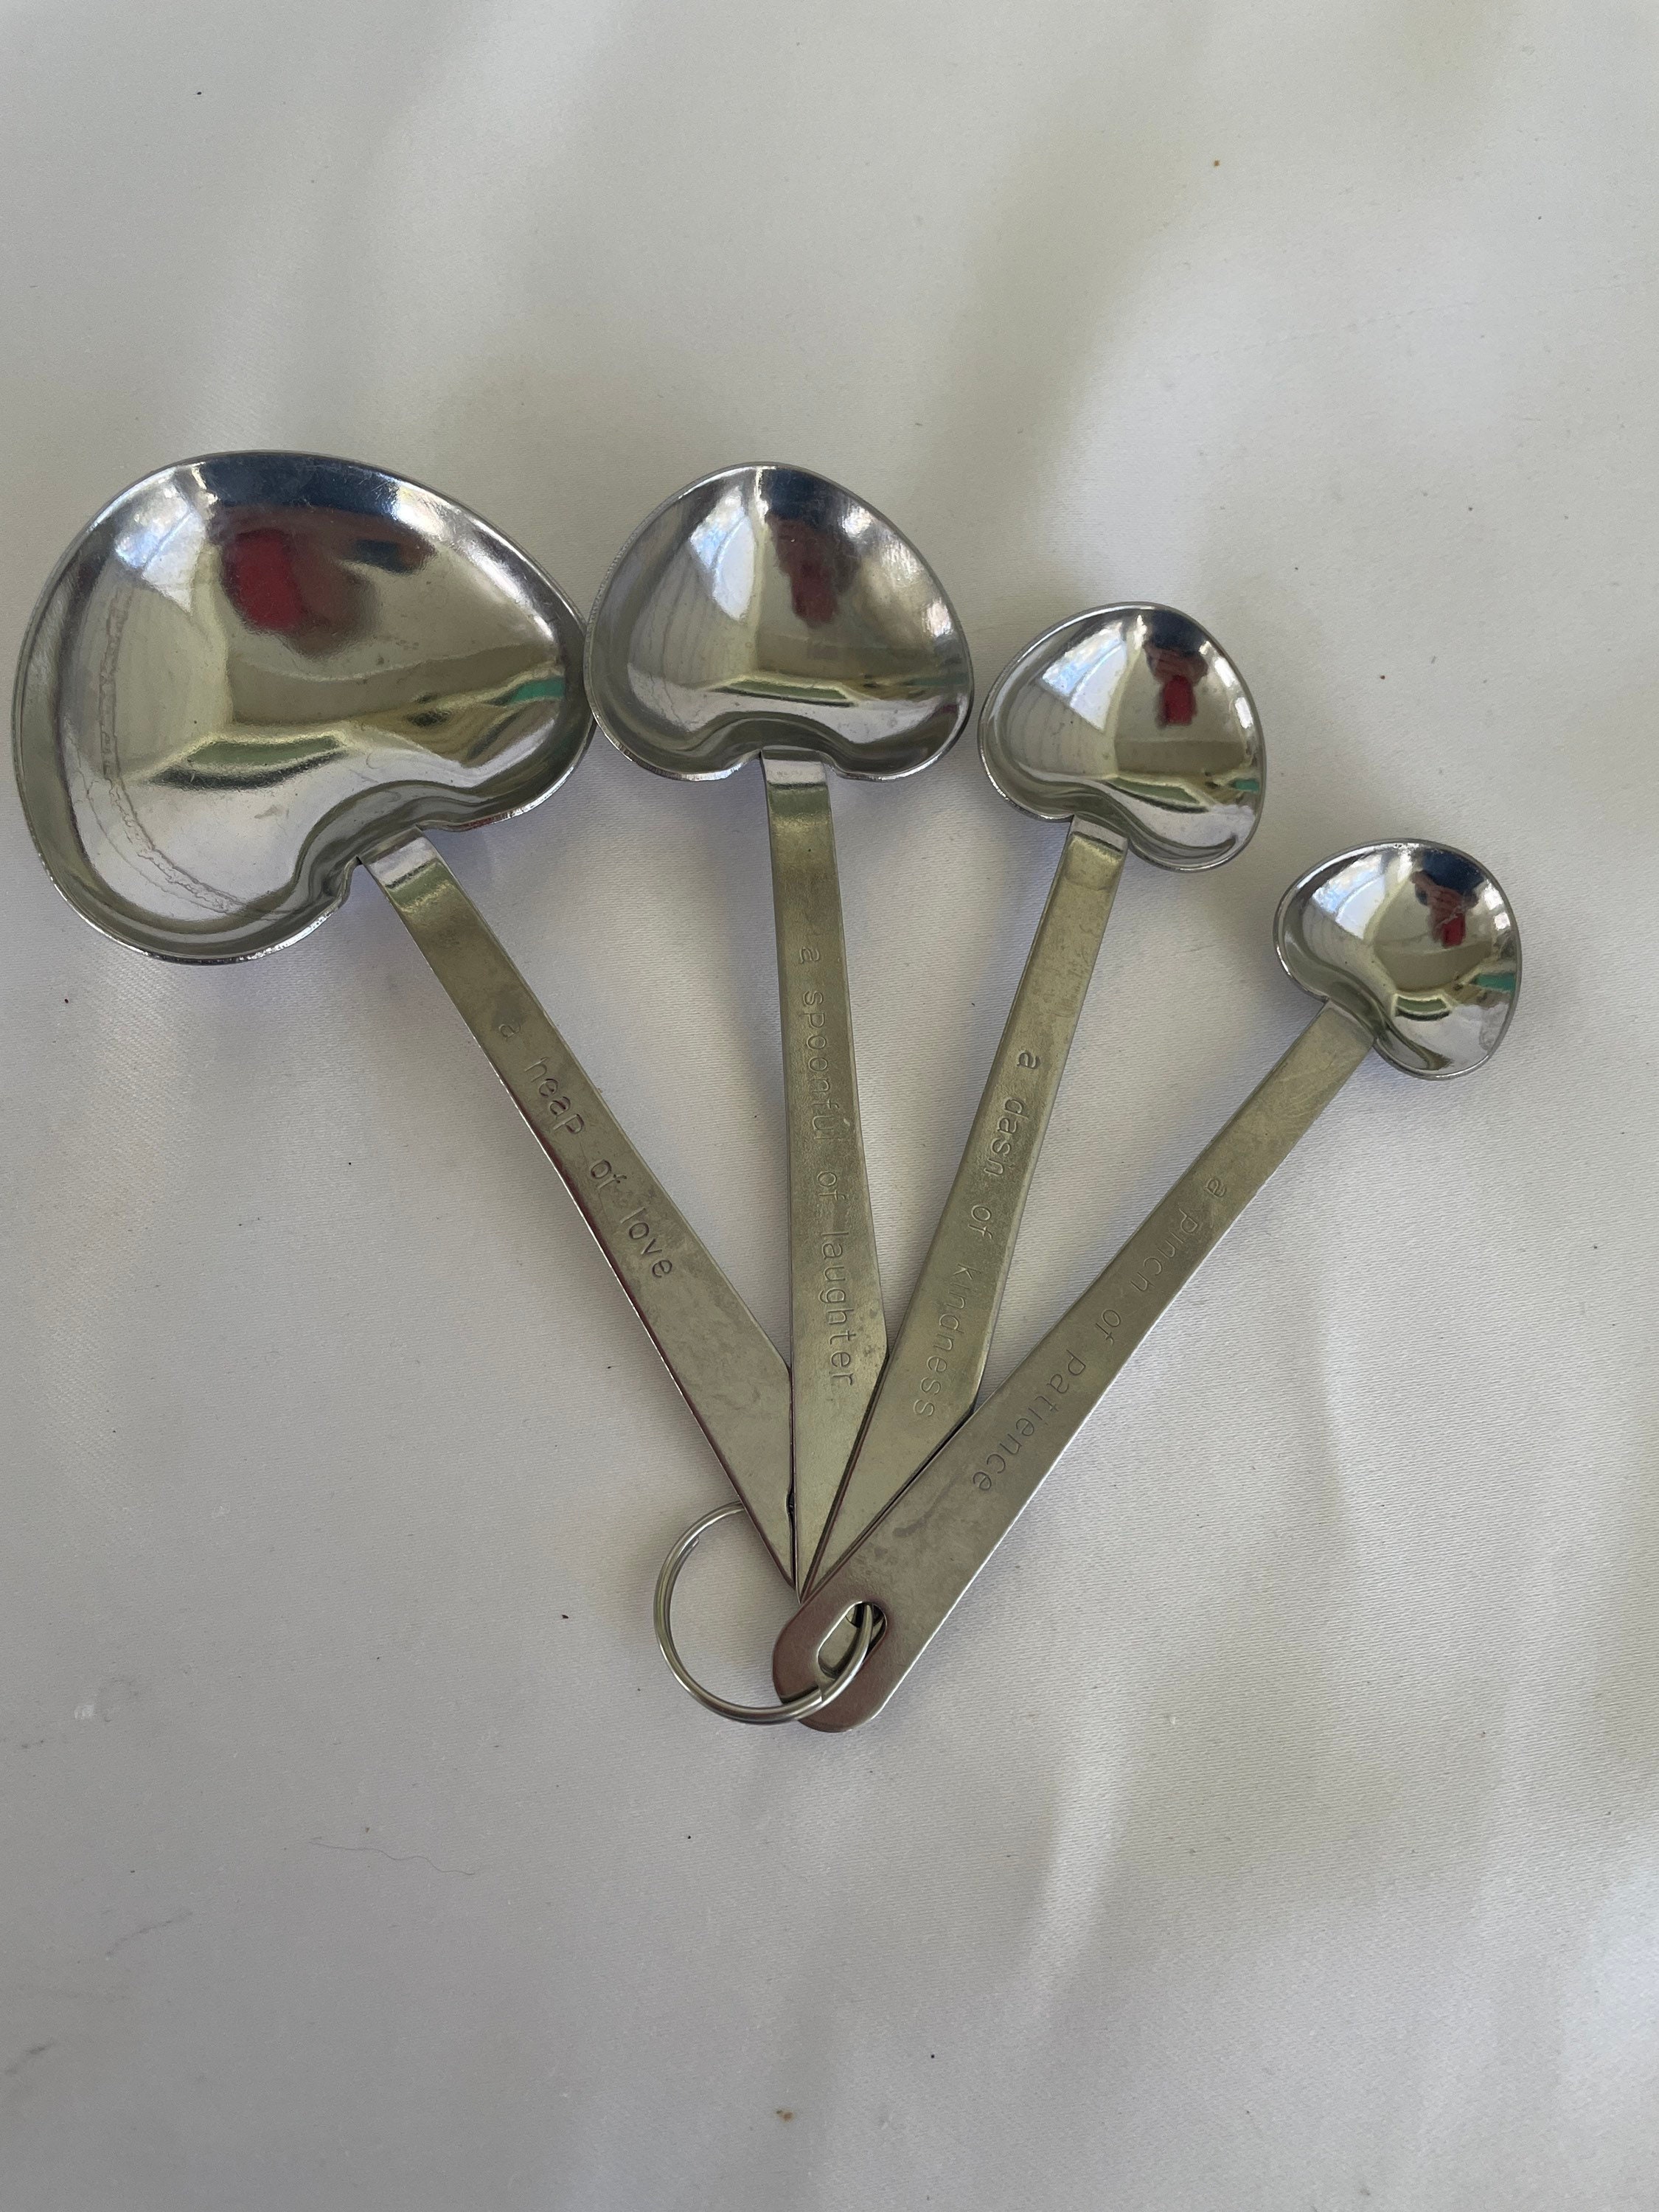 CuttleLab 22-Piece Stainless Steel Measuring Cups and Spoons Set, Tad Dash  Pinch Smidgen Drop Mini